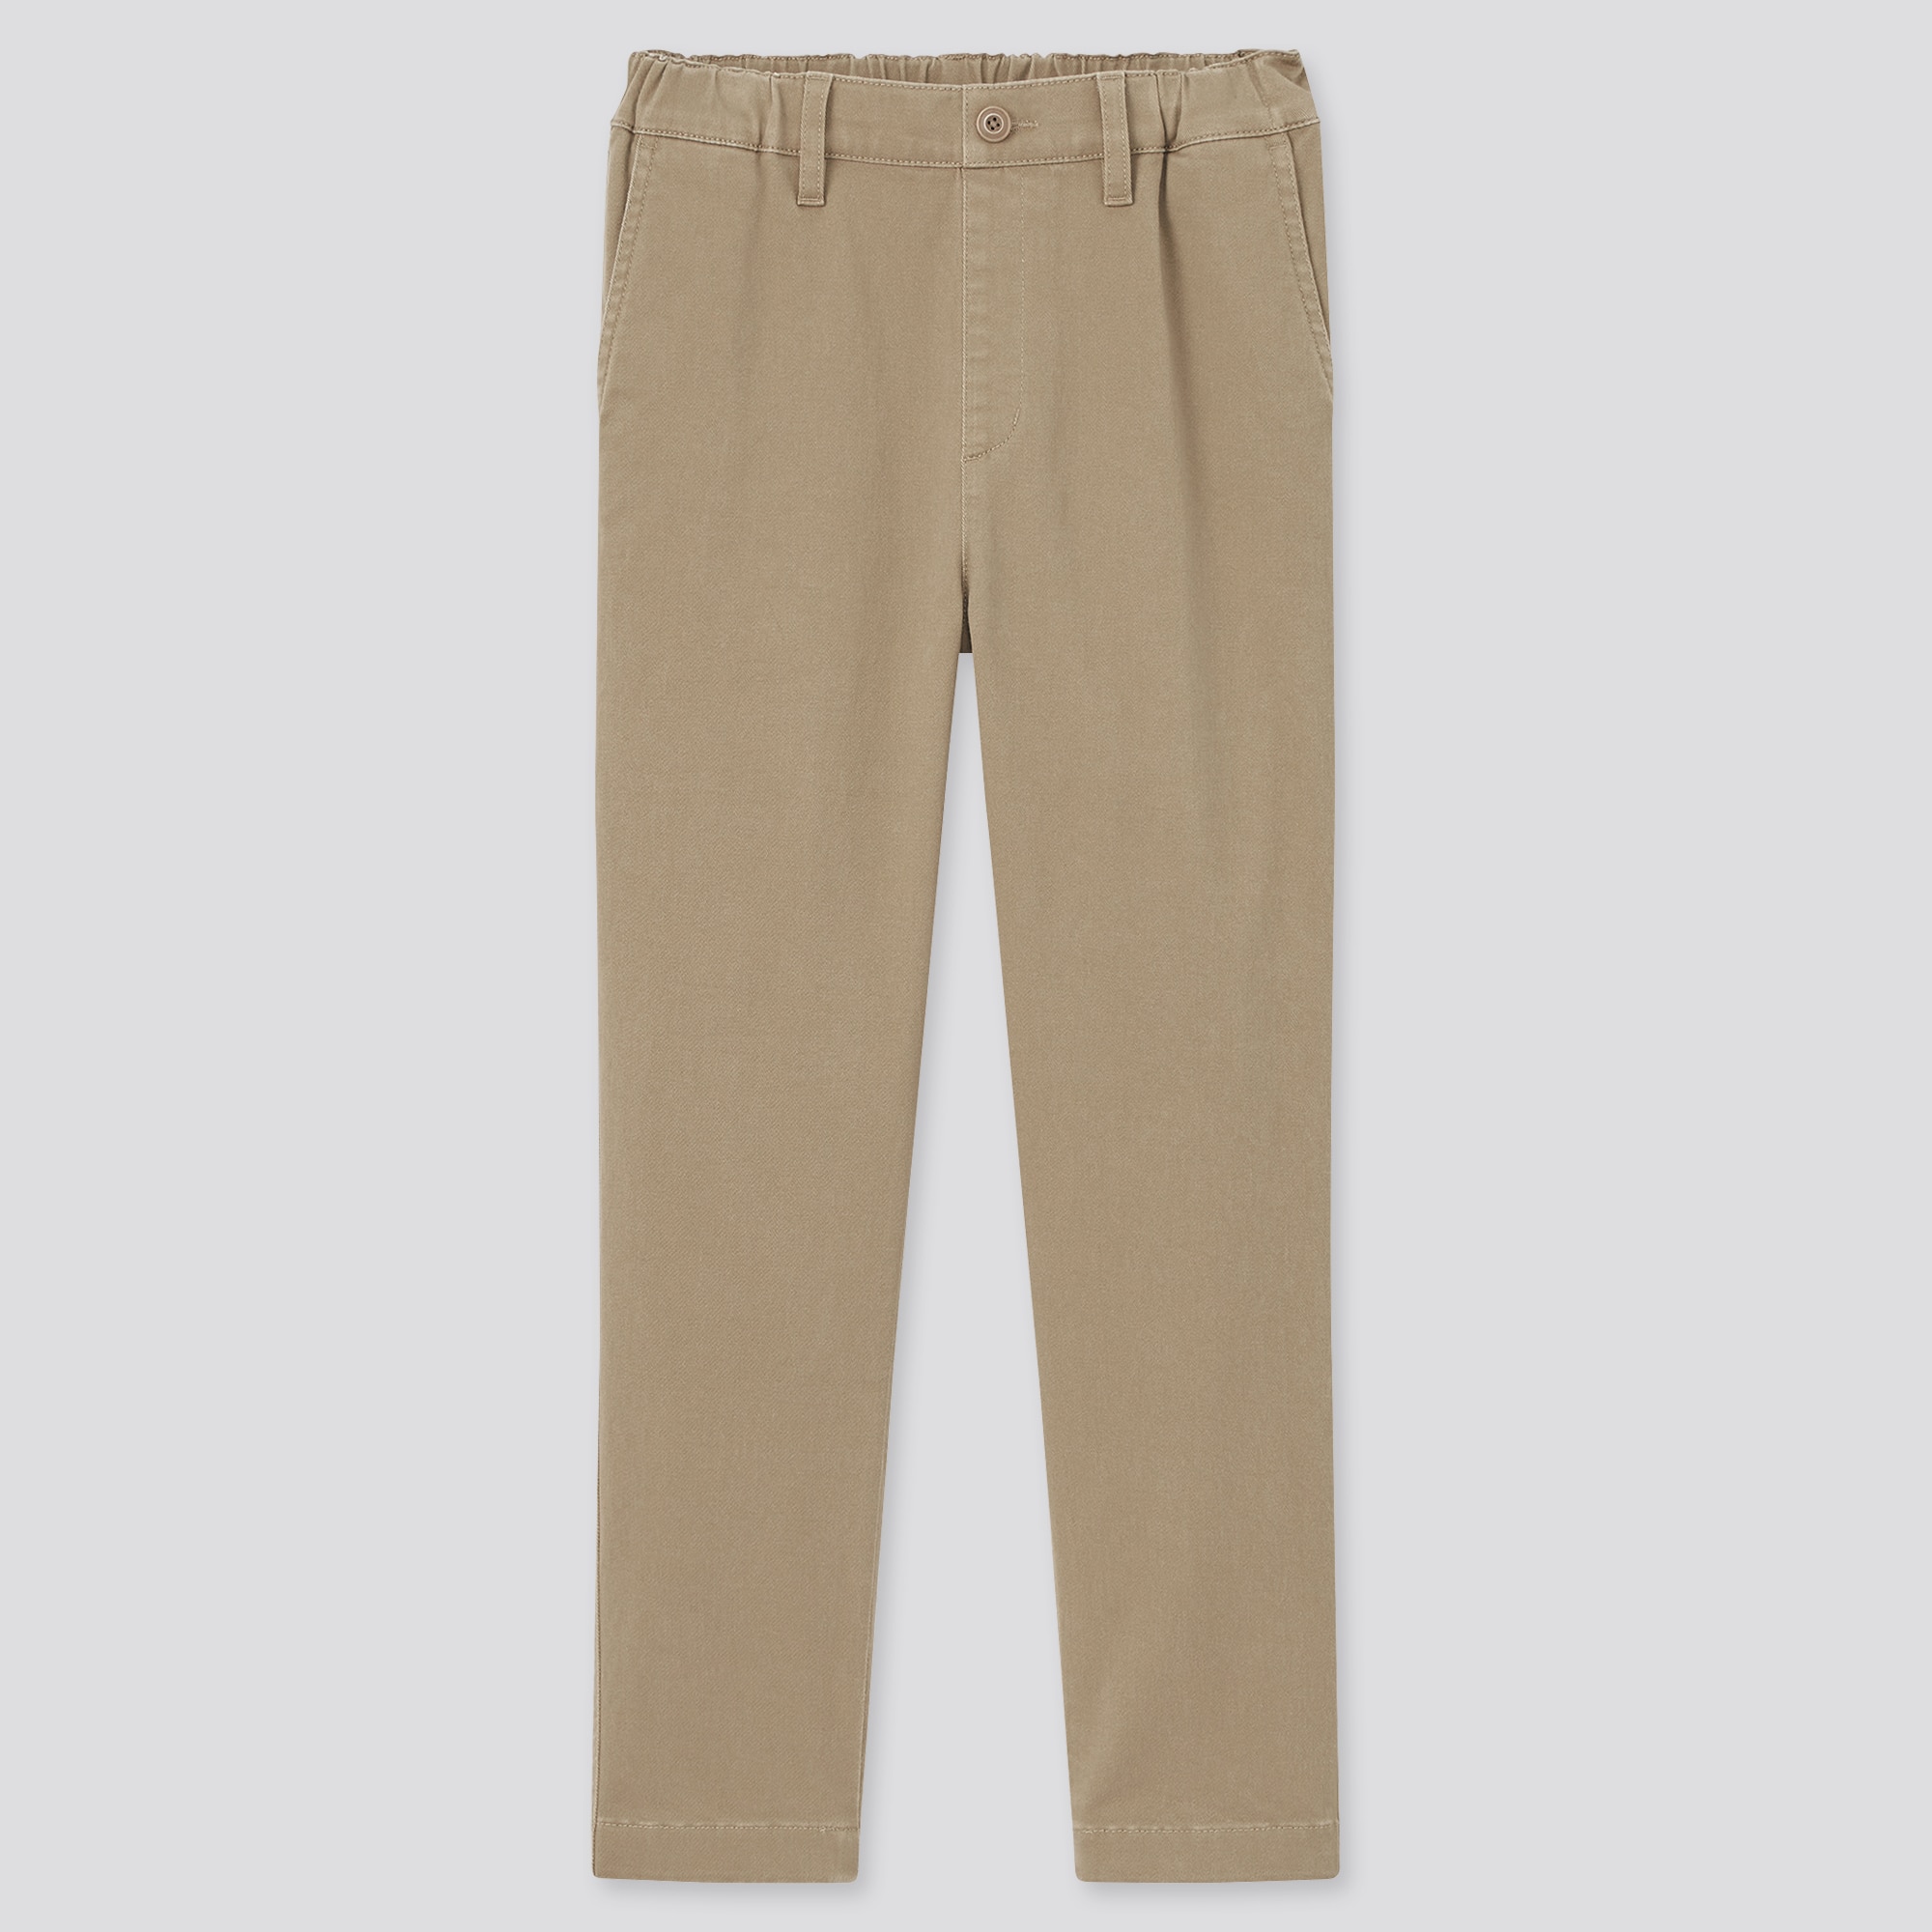 UNIQLO HEATTECH Warm-Lined Pants | StyleHint